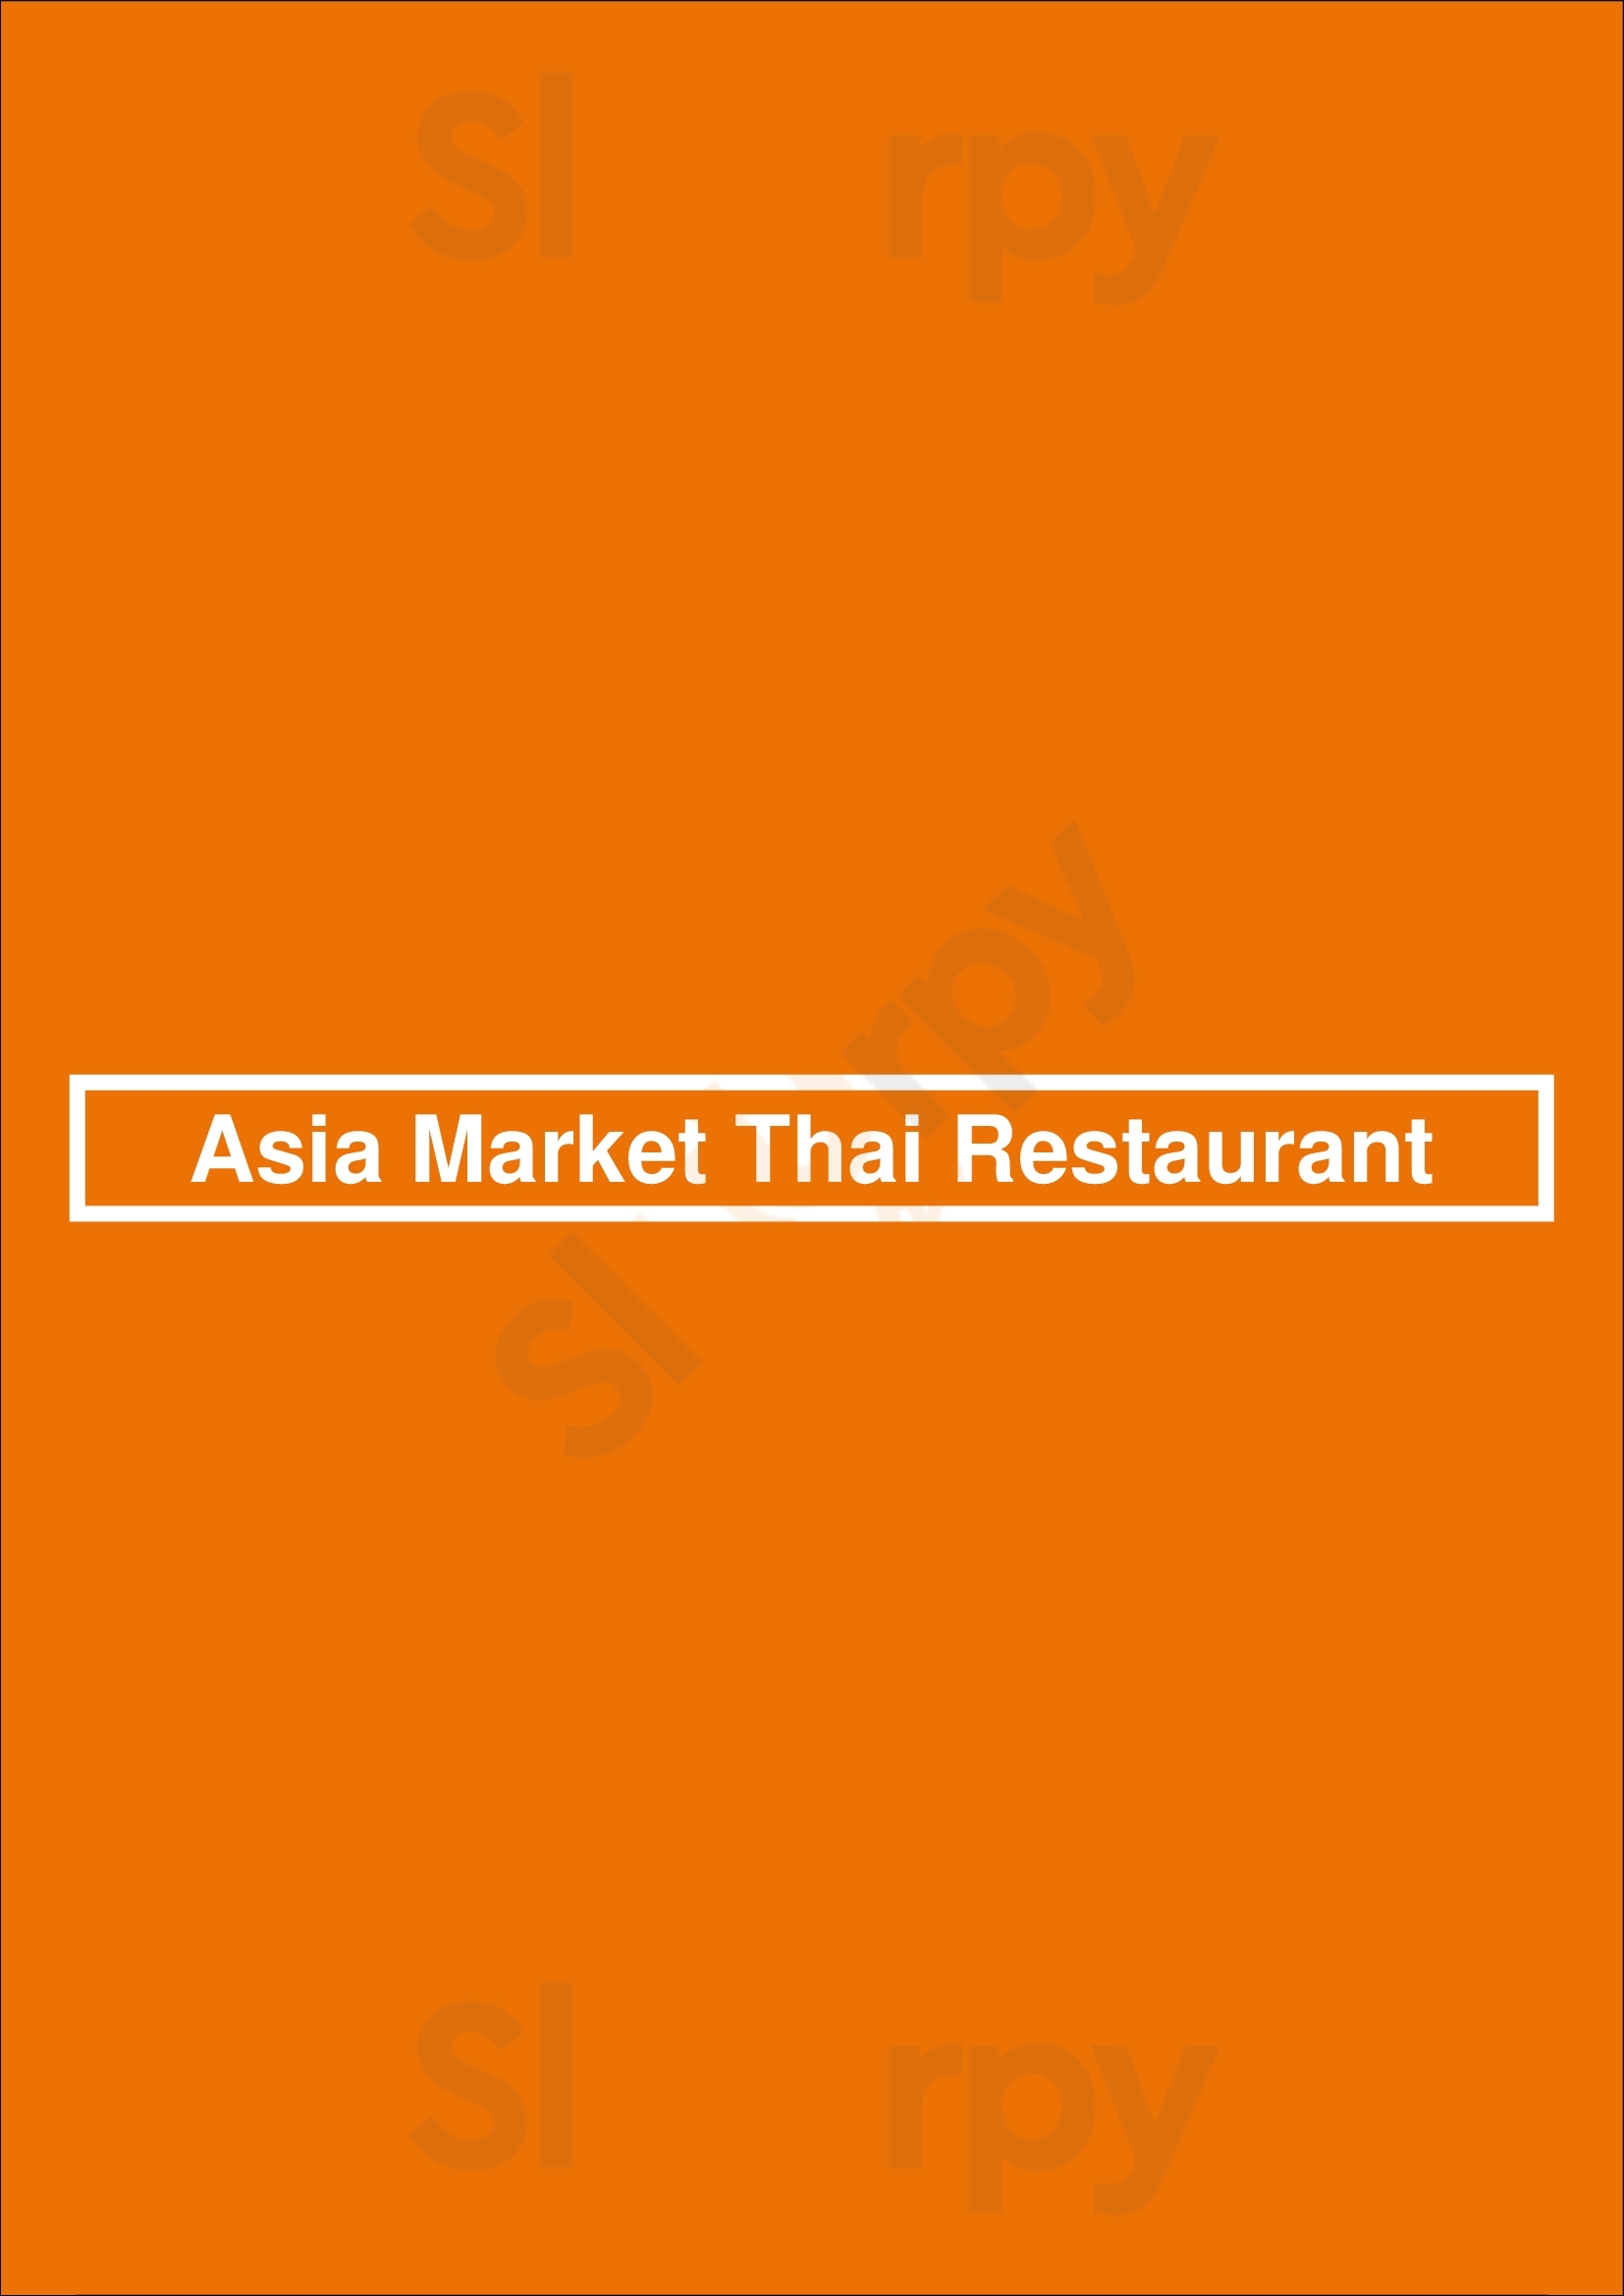 Asia Market Thai Restaurant Houston Menu - 1